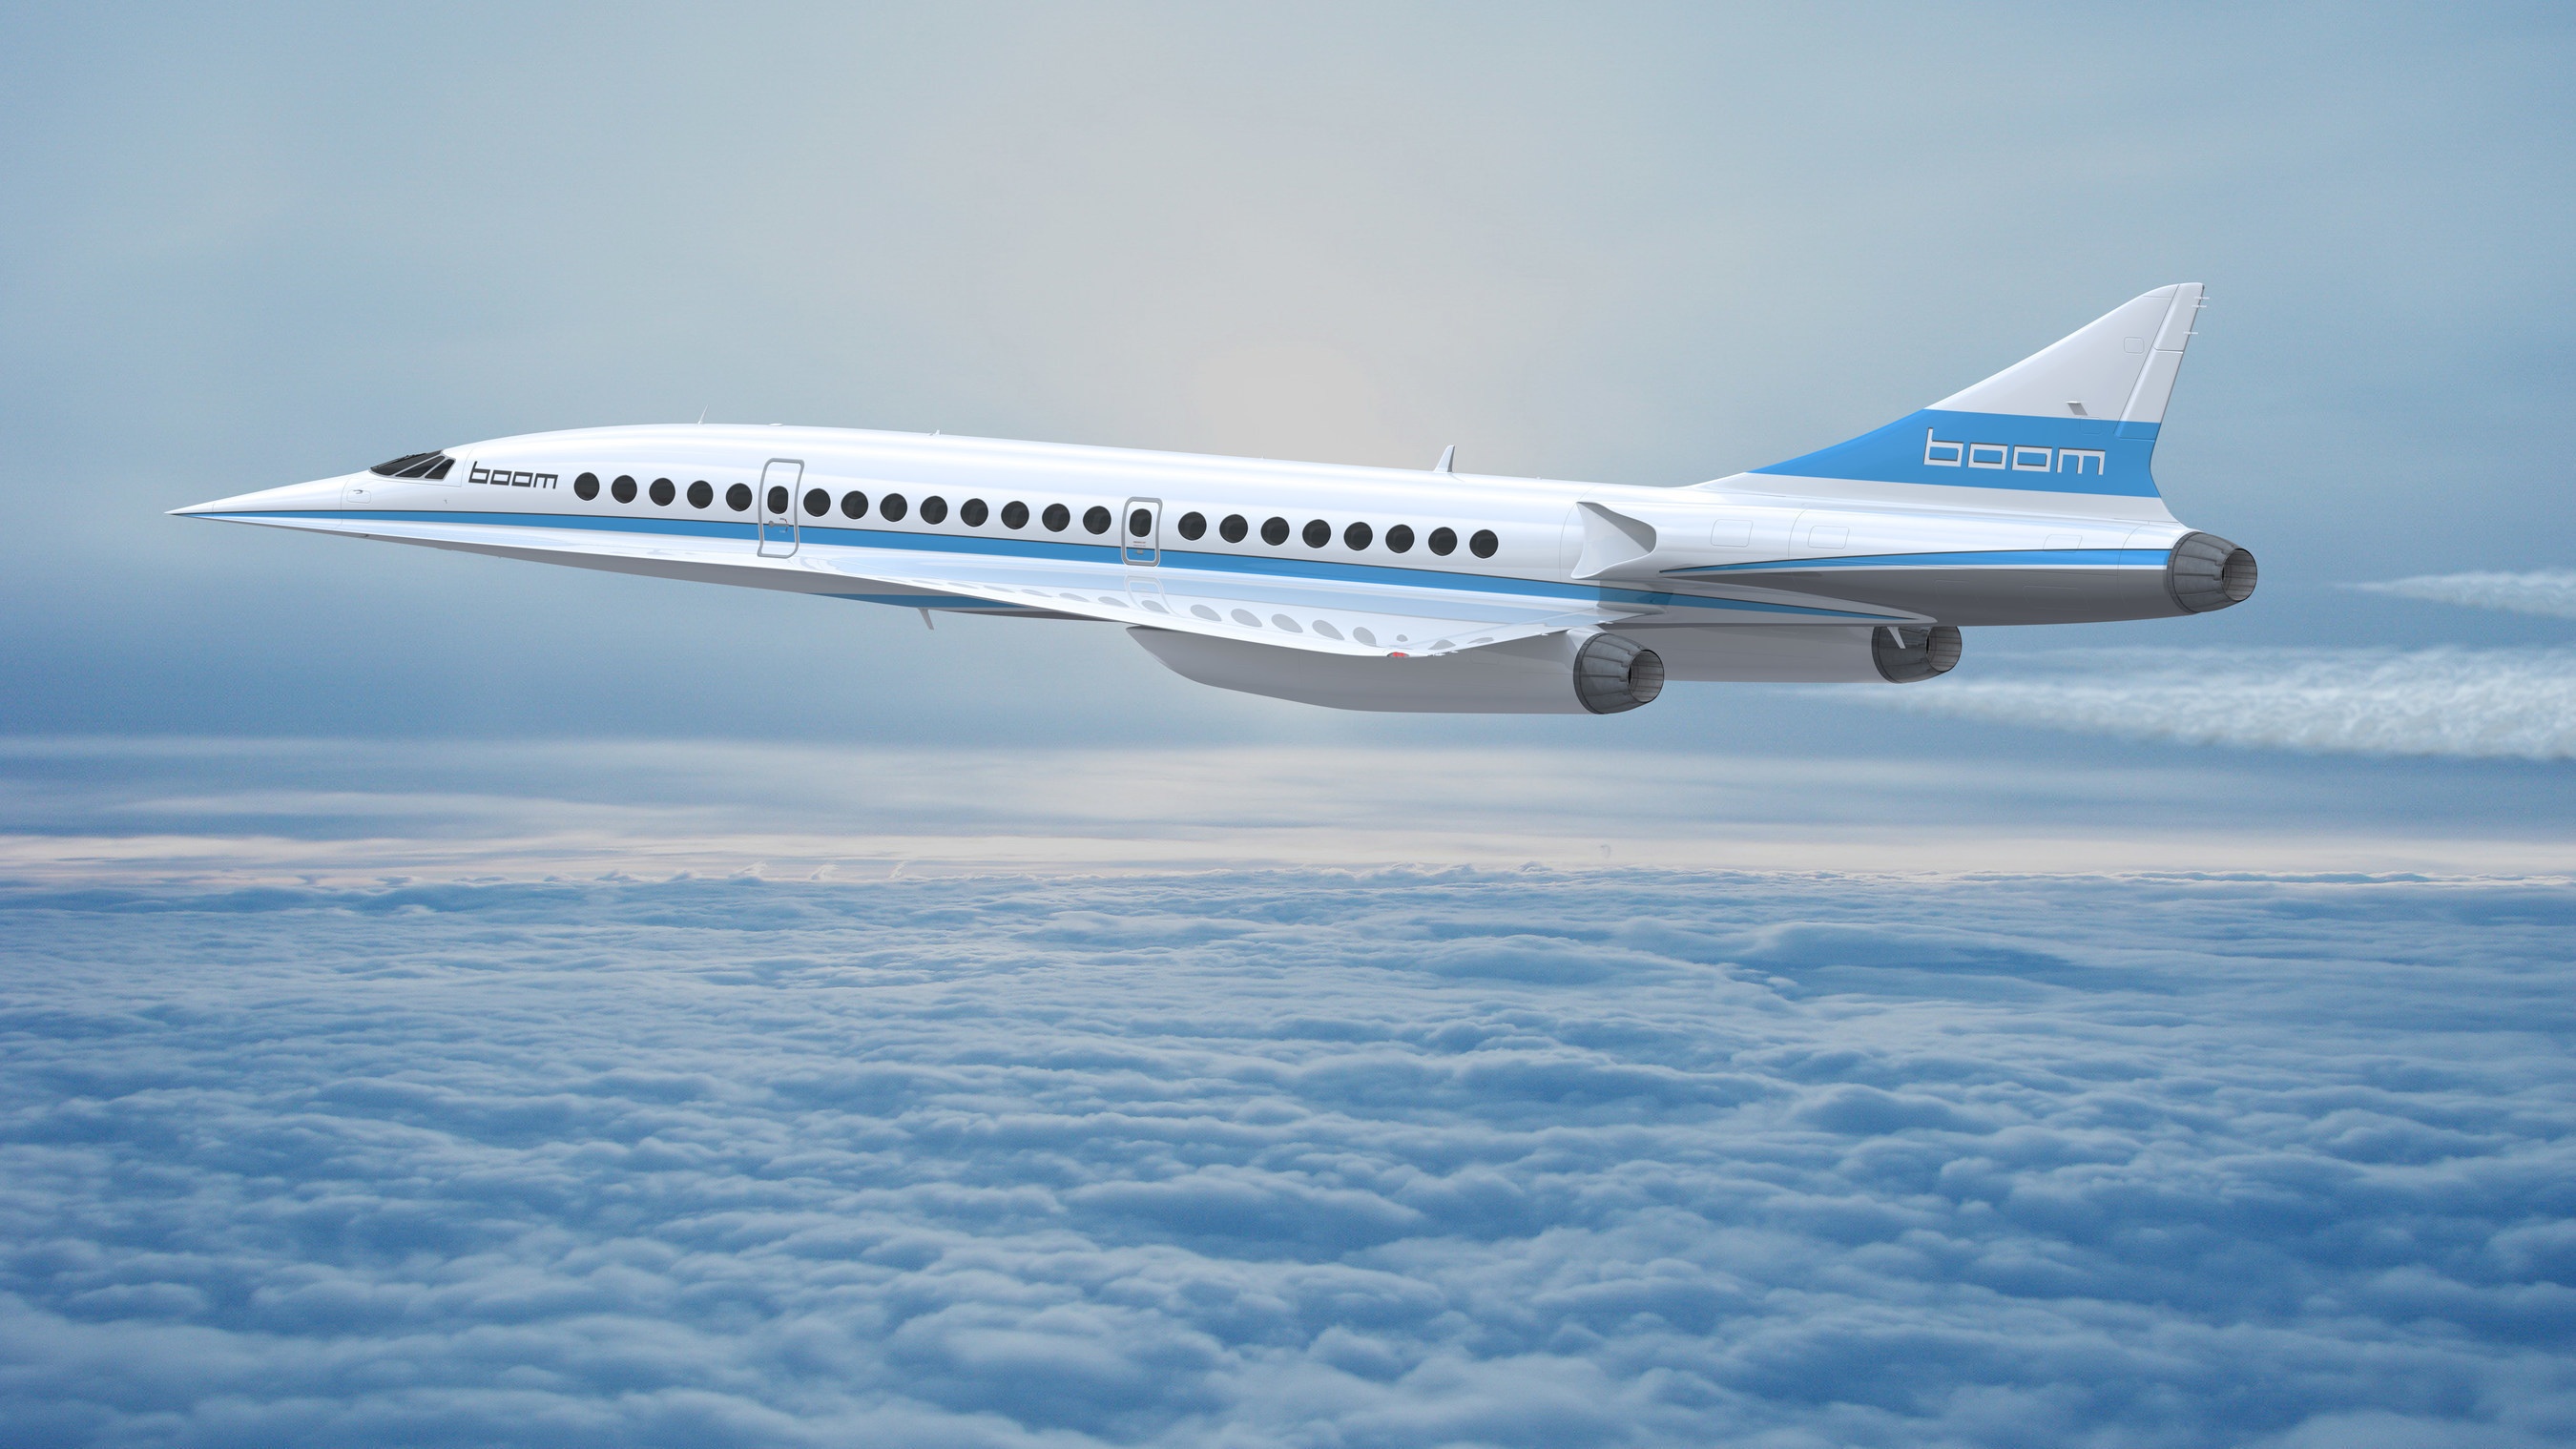 Boom supersonic plane in flight.